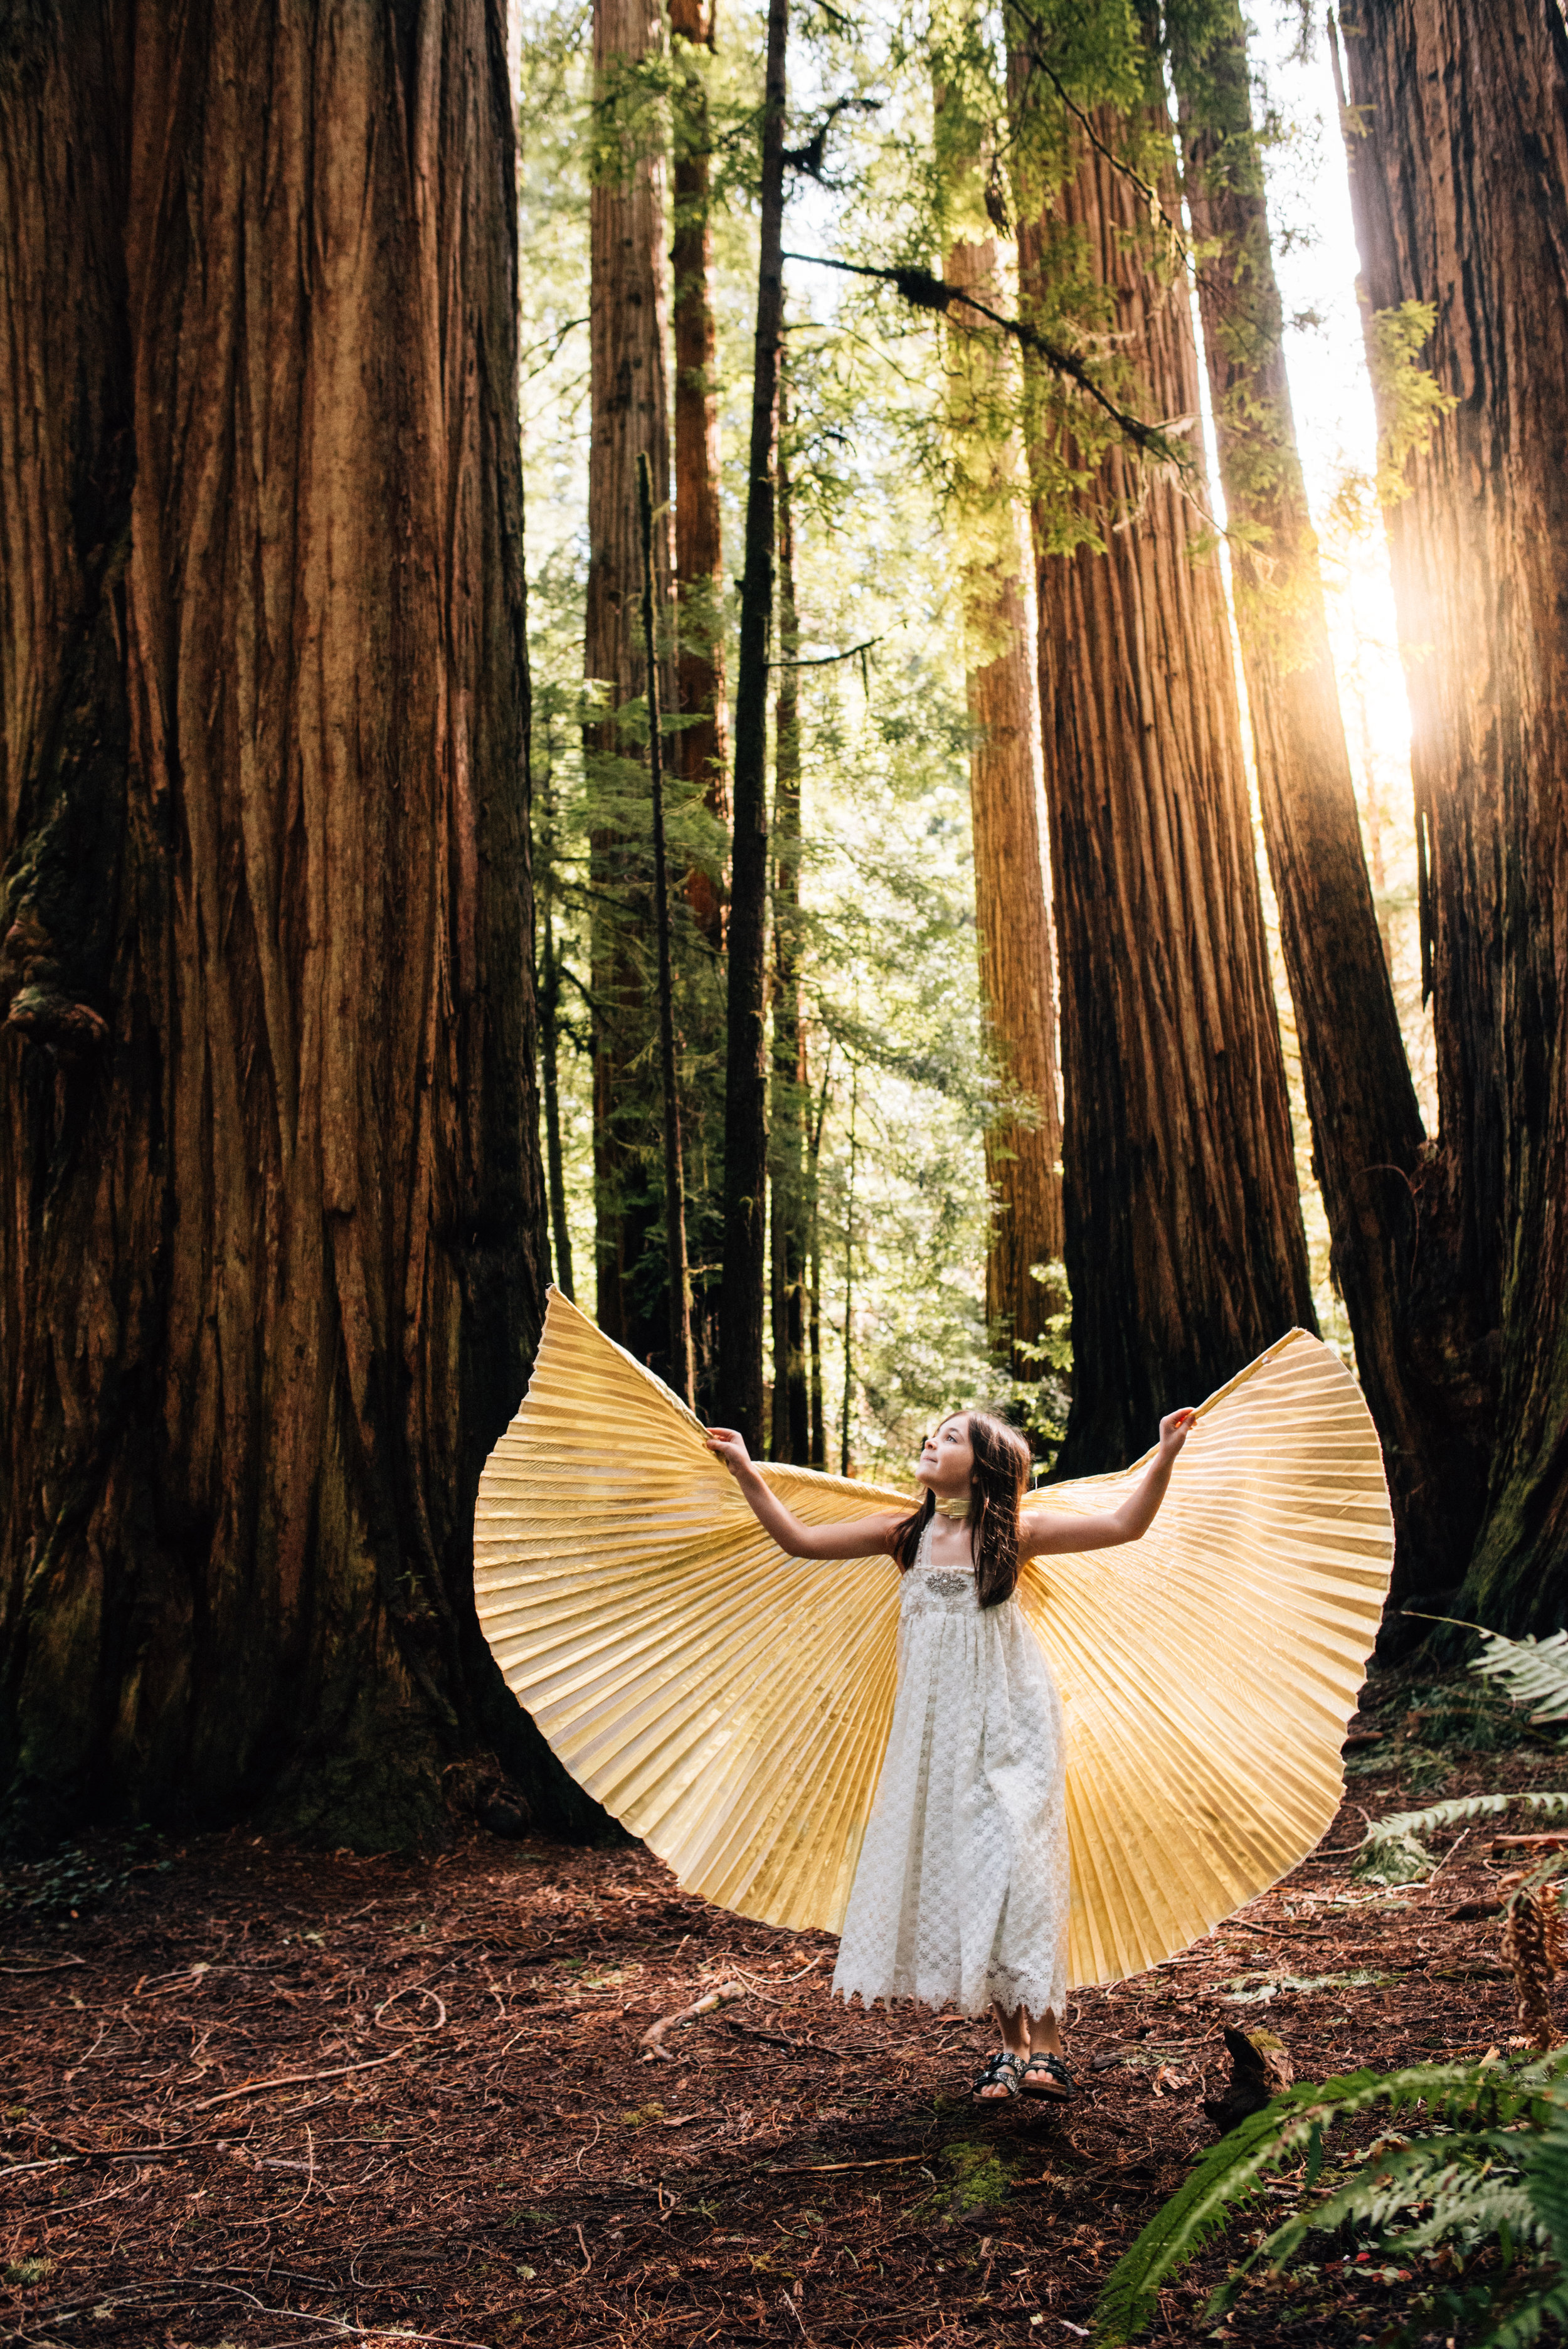 Chloe Redwoods Butterfly-26.jpg